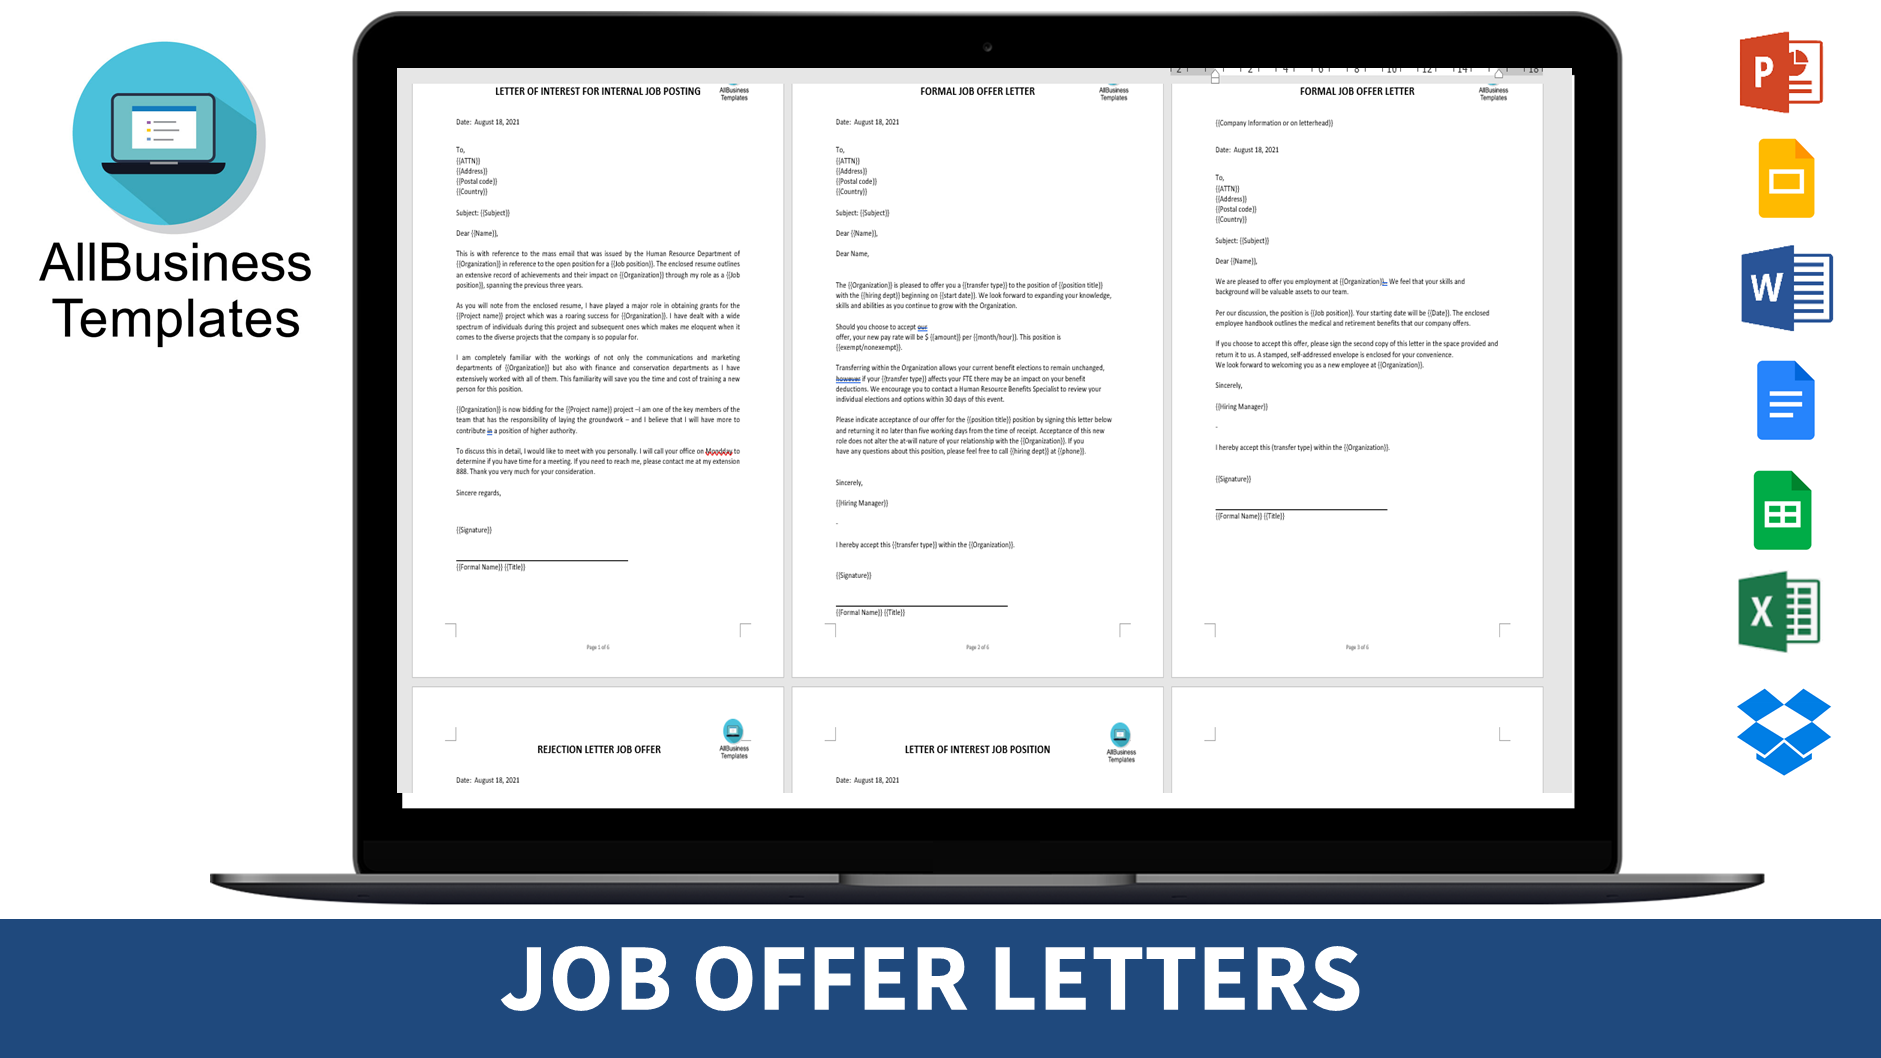 Example Job Offer Letter from www.allbusinesstemplates.com